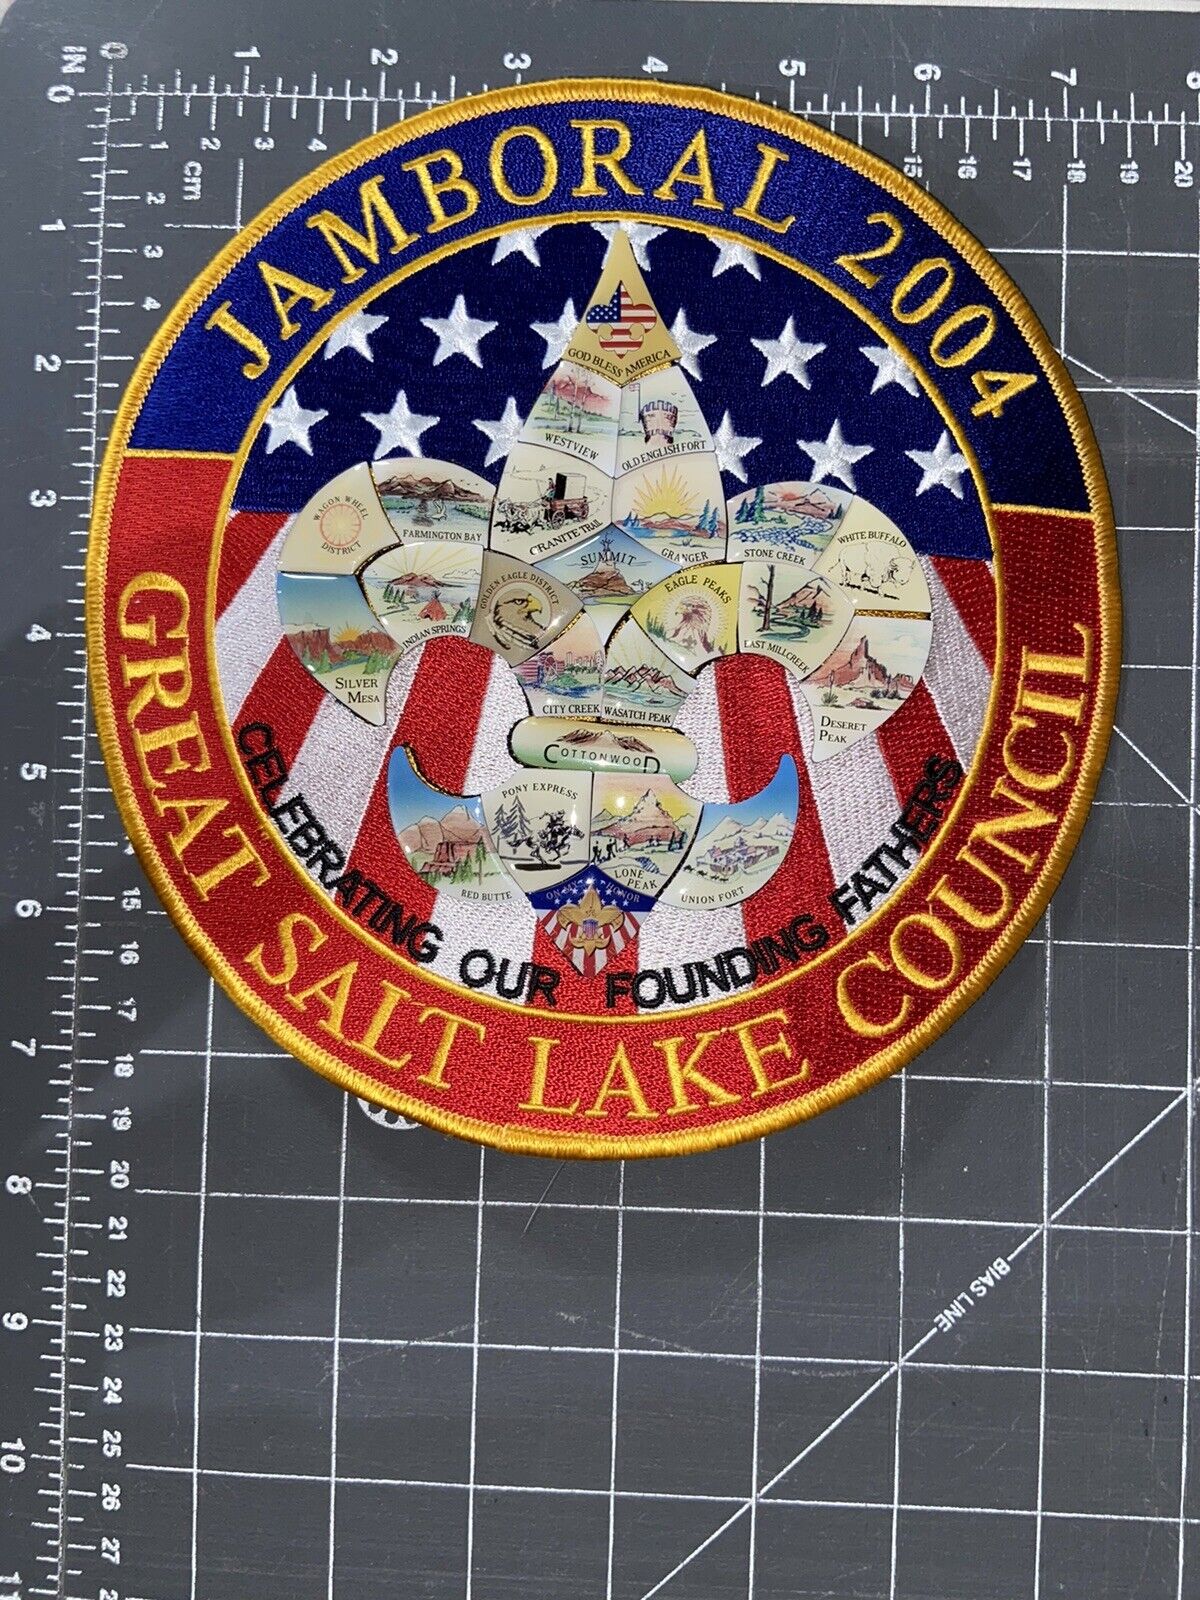 Boy Scouts BSA Great Salt Lake Council Jamboral 2004 Huge Patch Complete Pin Set